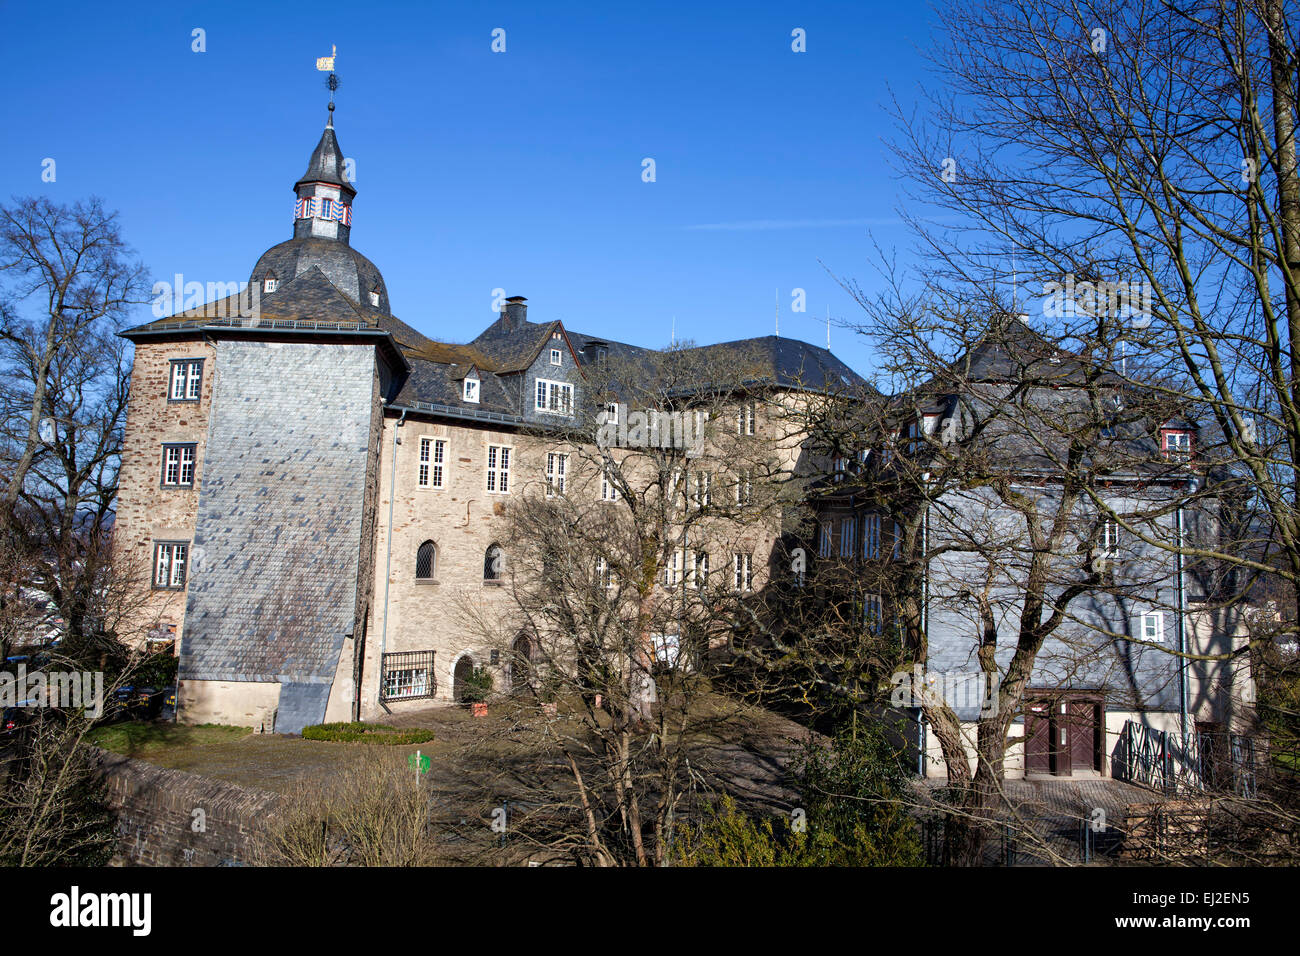 Castle buildings of the Oberes Schloss or Upper Castle, Siegen, North Rhine-Westphalia, Germany, Europe, das obere Schloss, Sieg Stock Photo